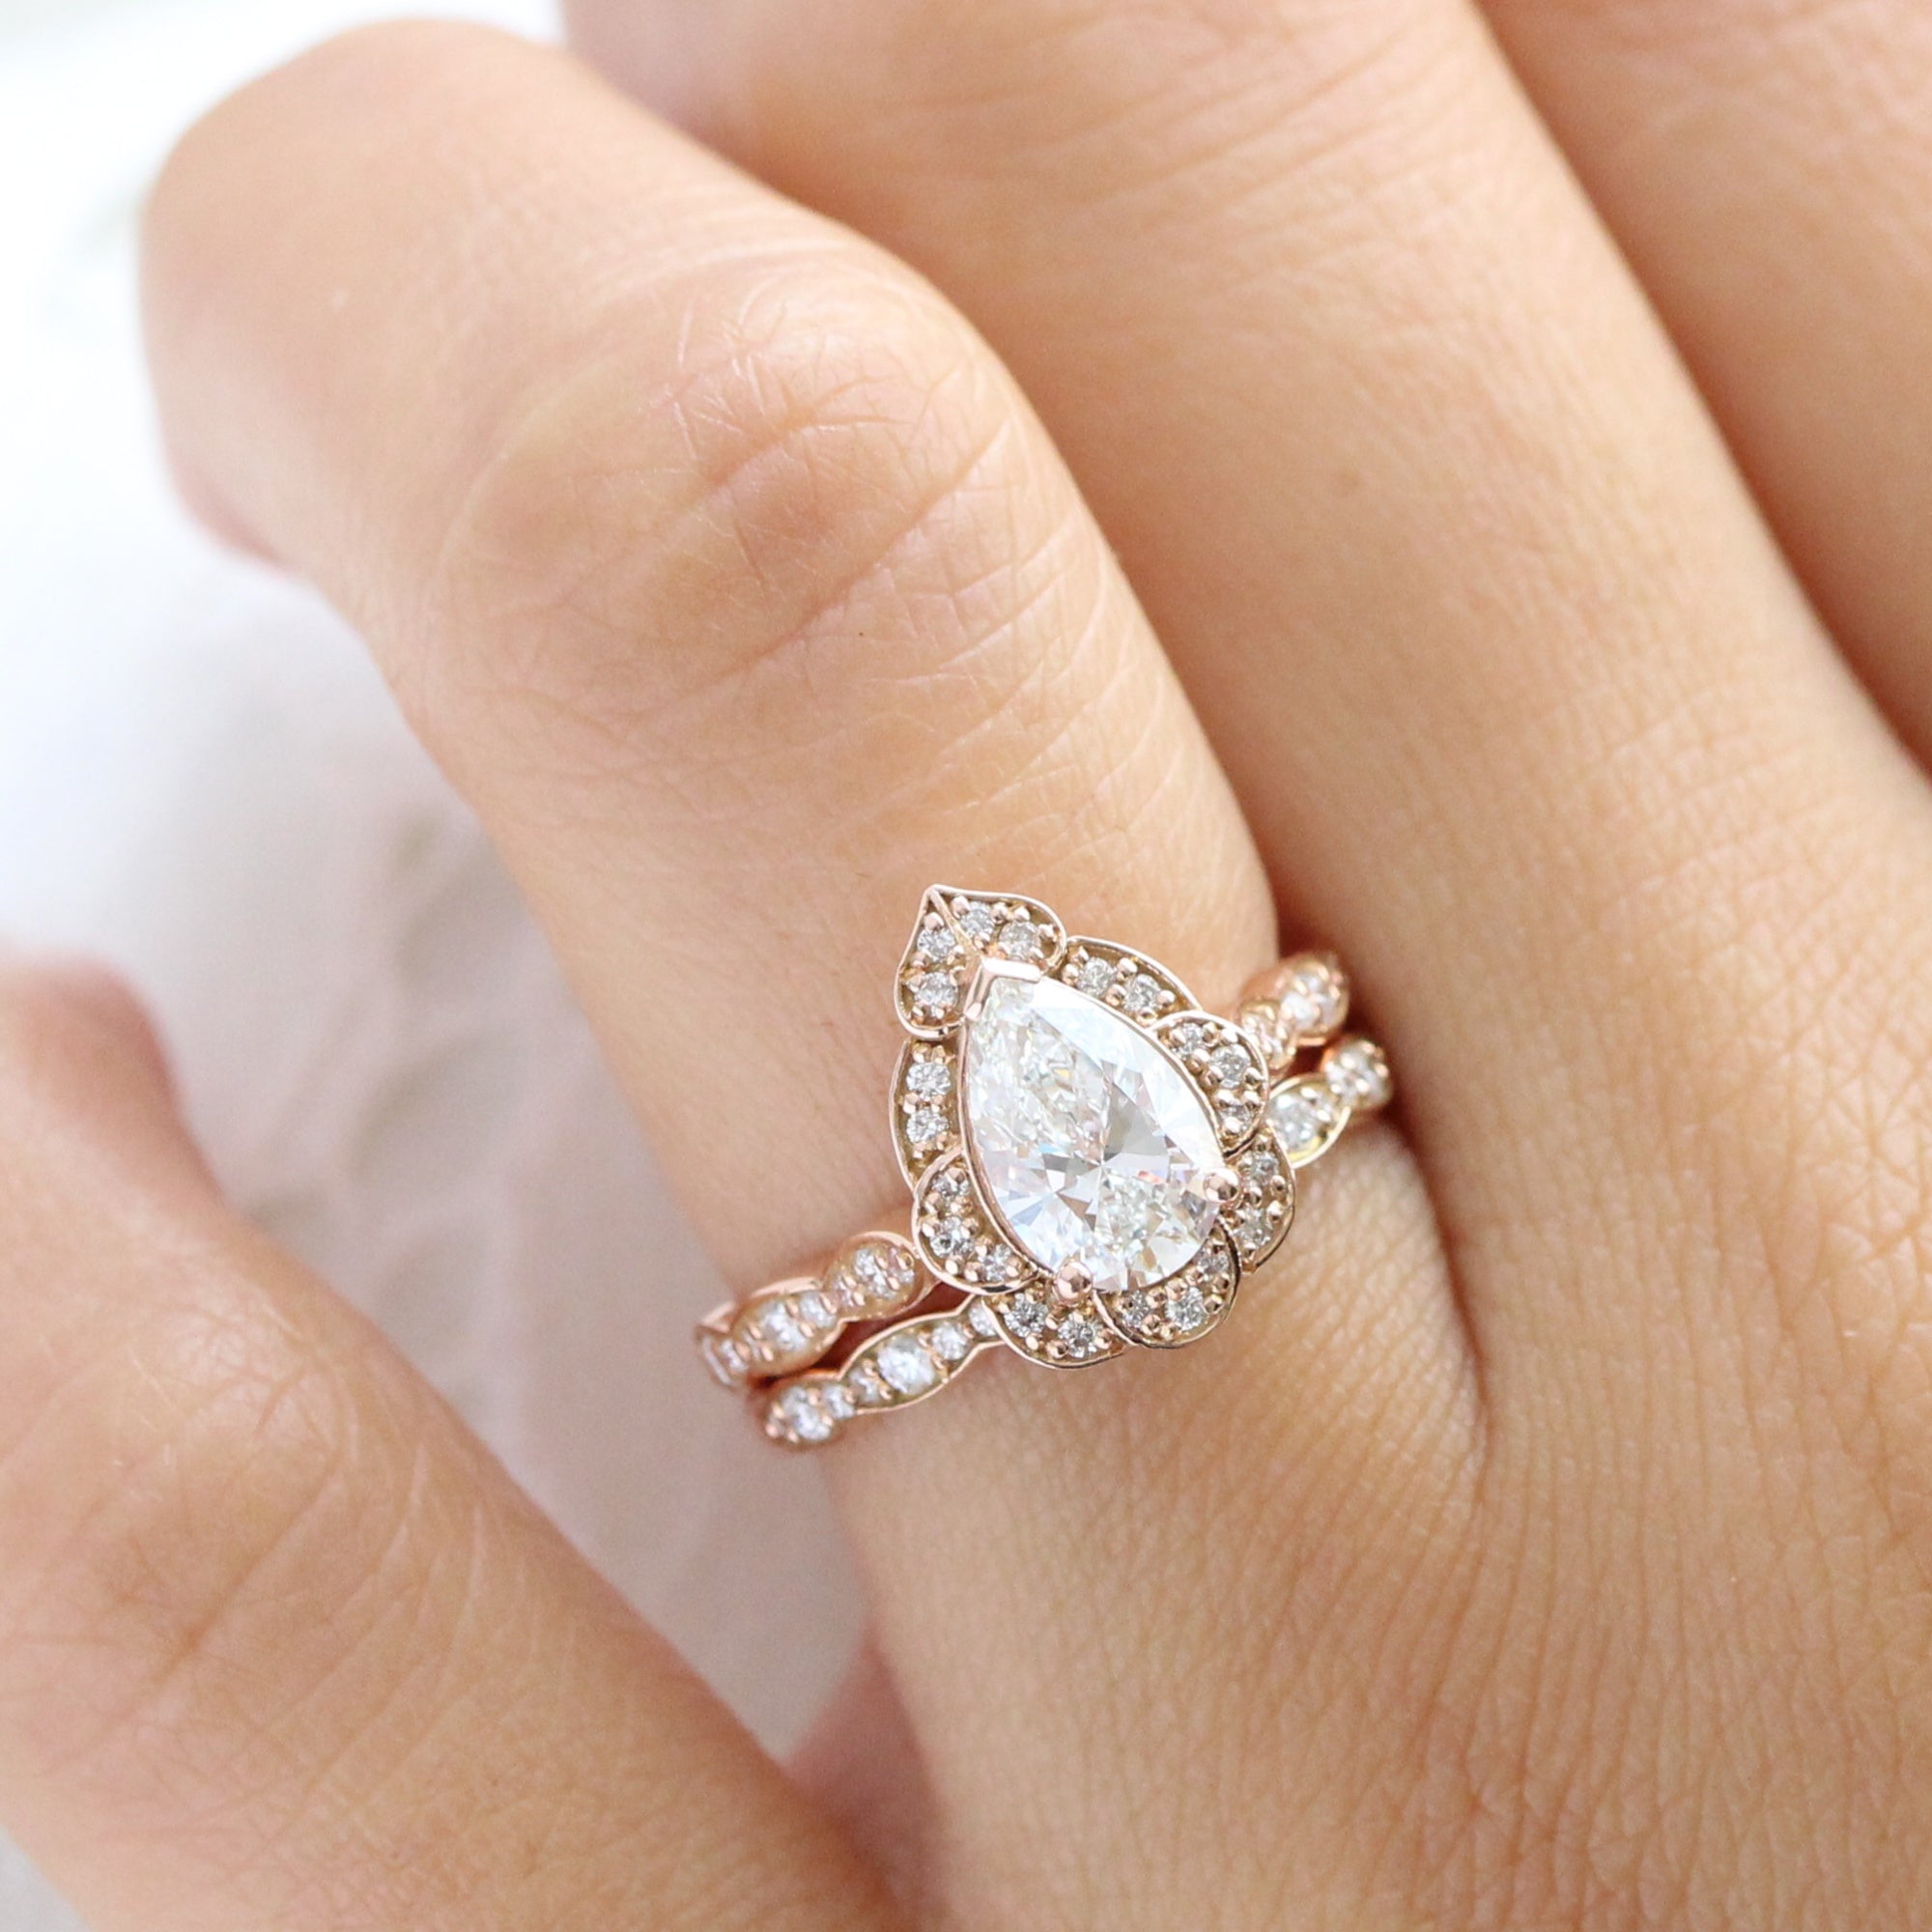 lab diamond ring stack rose gold vintage halo pear diamond engagement ring set La More Design Jewelry